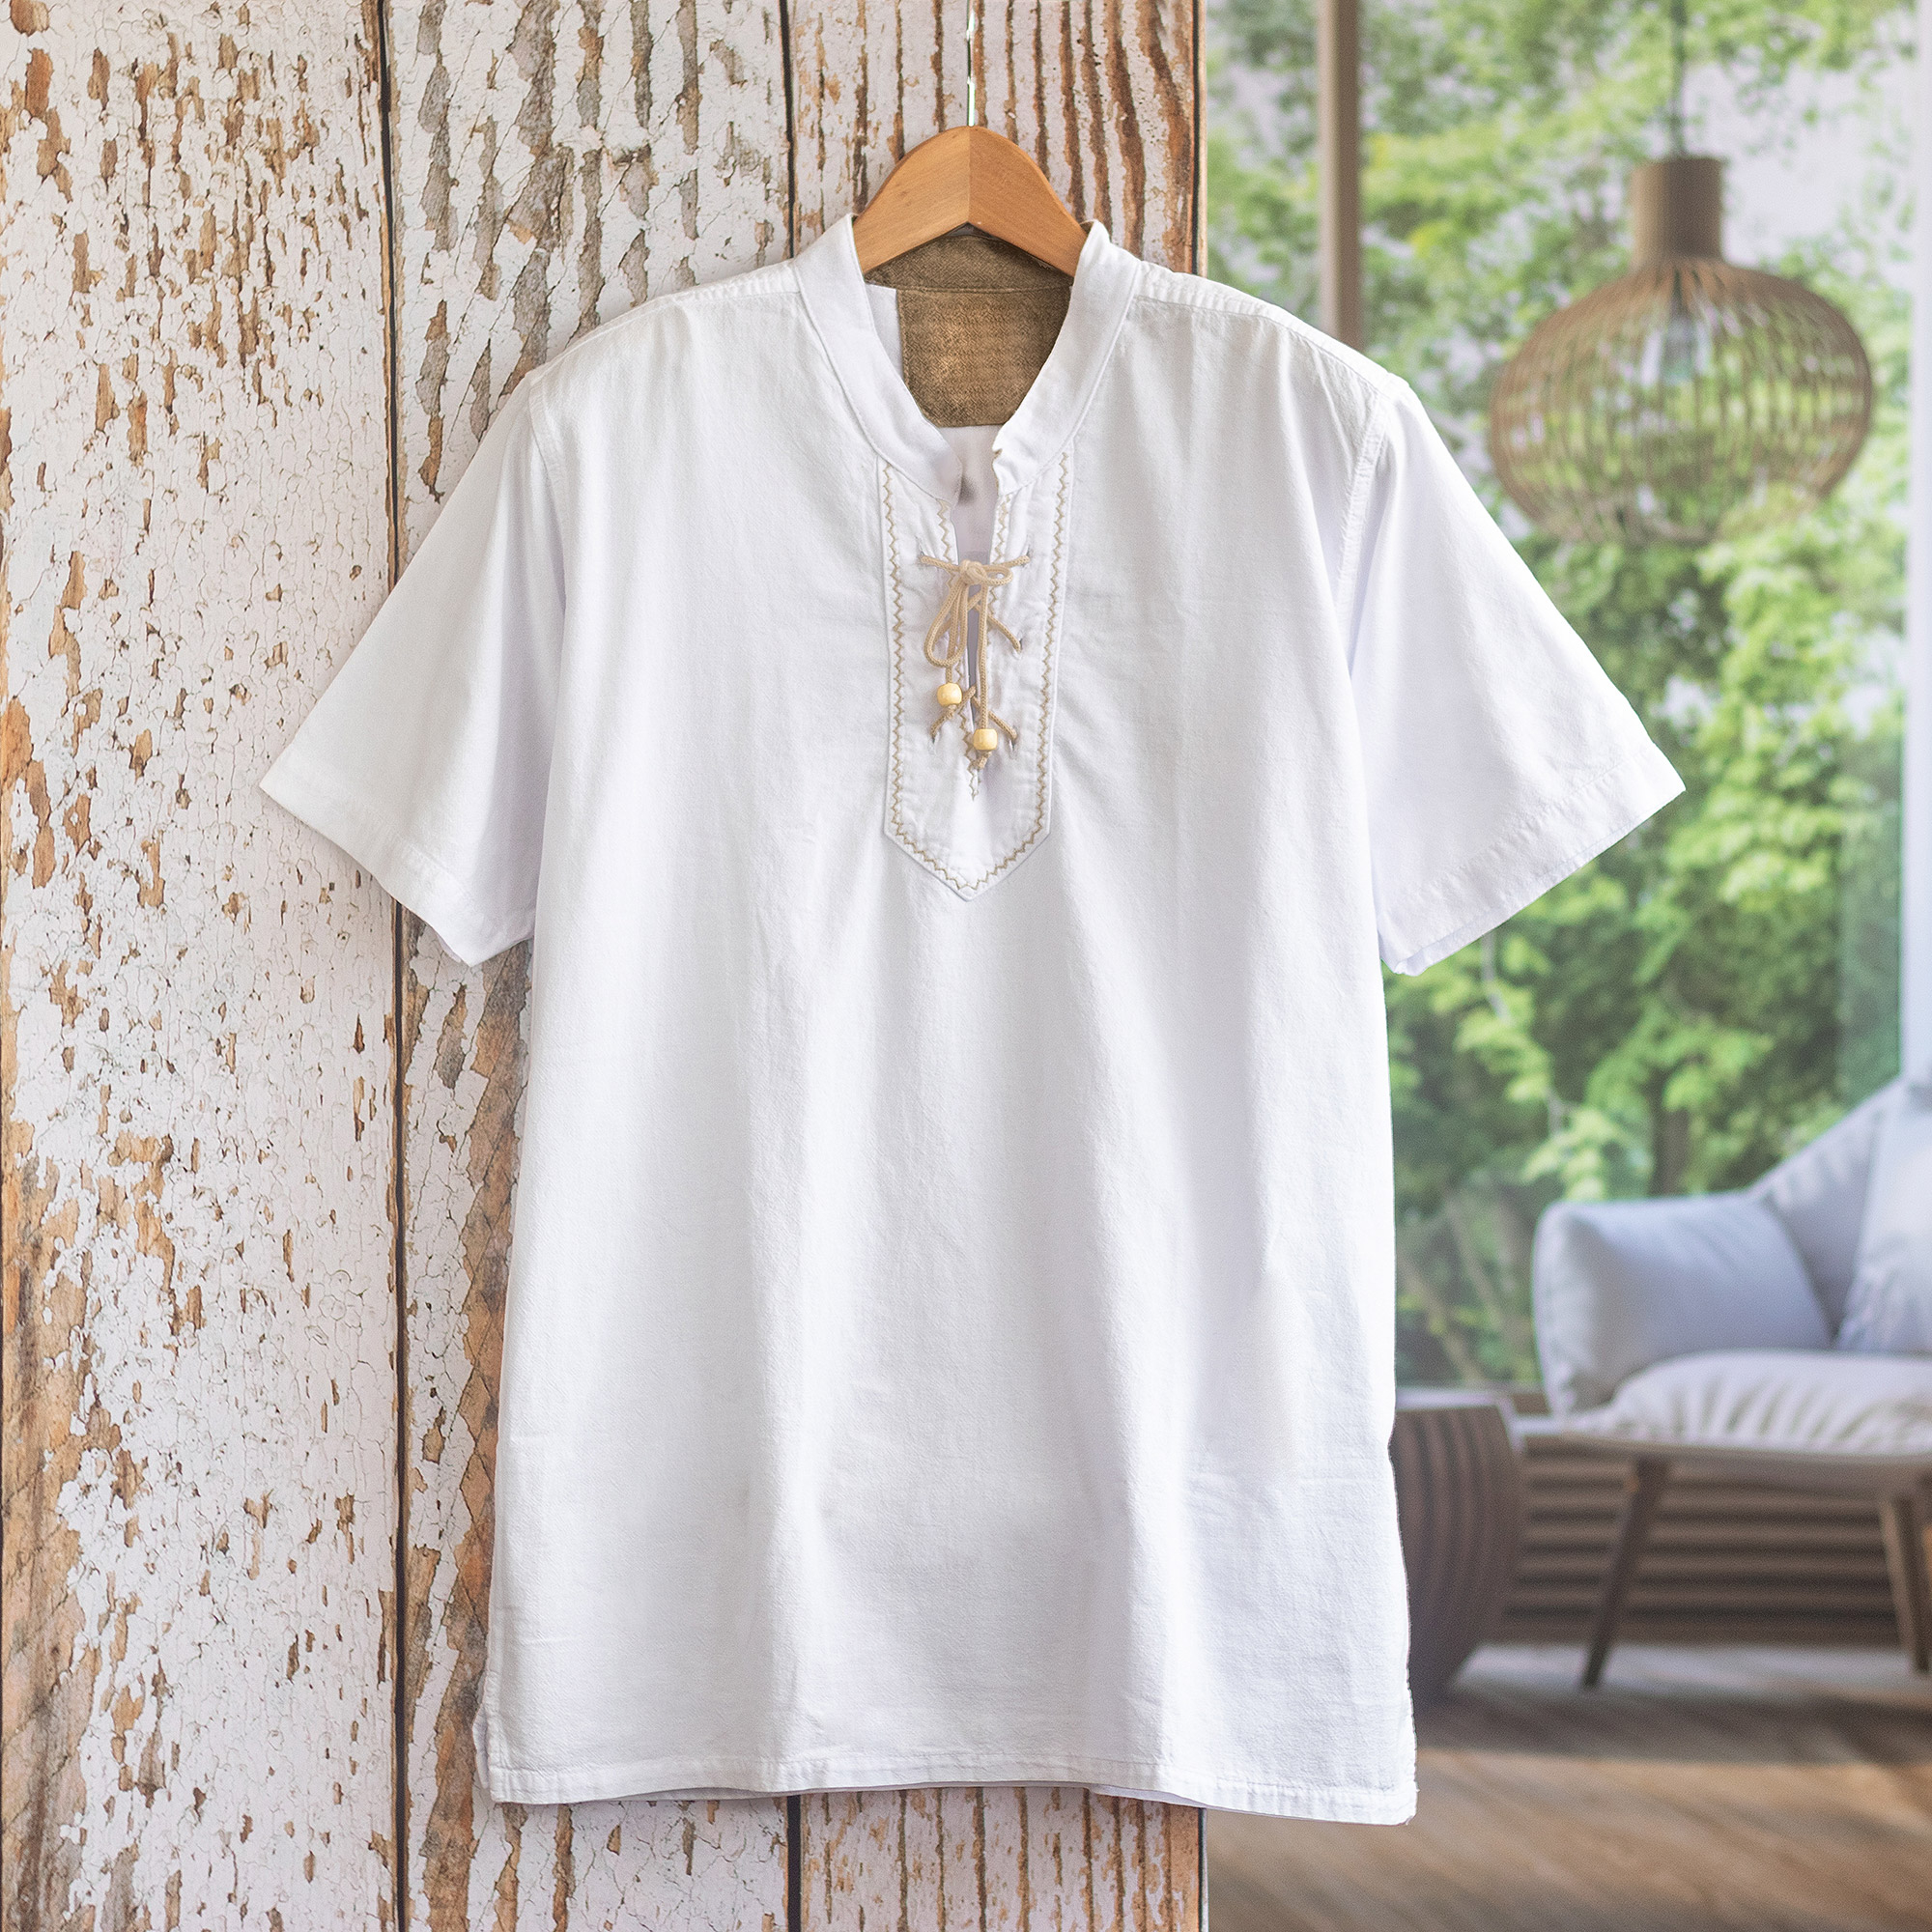 Men's Casual White Cotton Shirt Bohemian Style Made in Peru, 'Summer